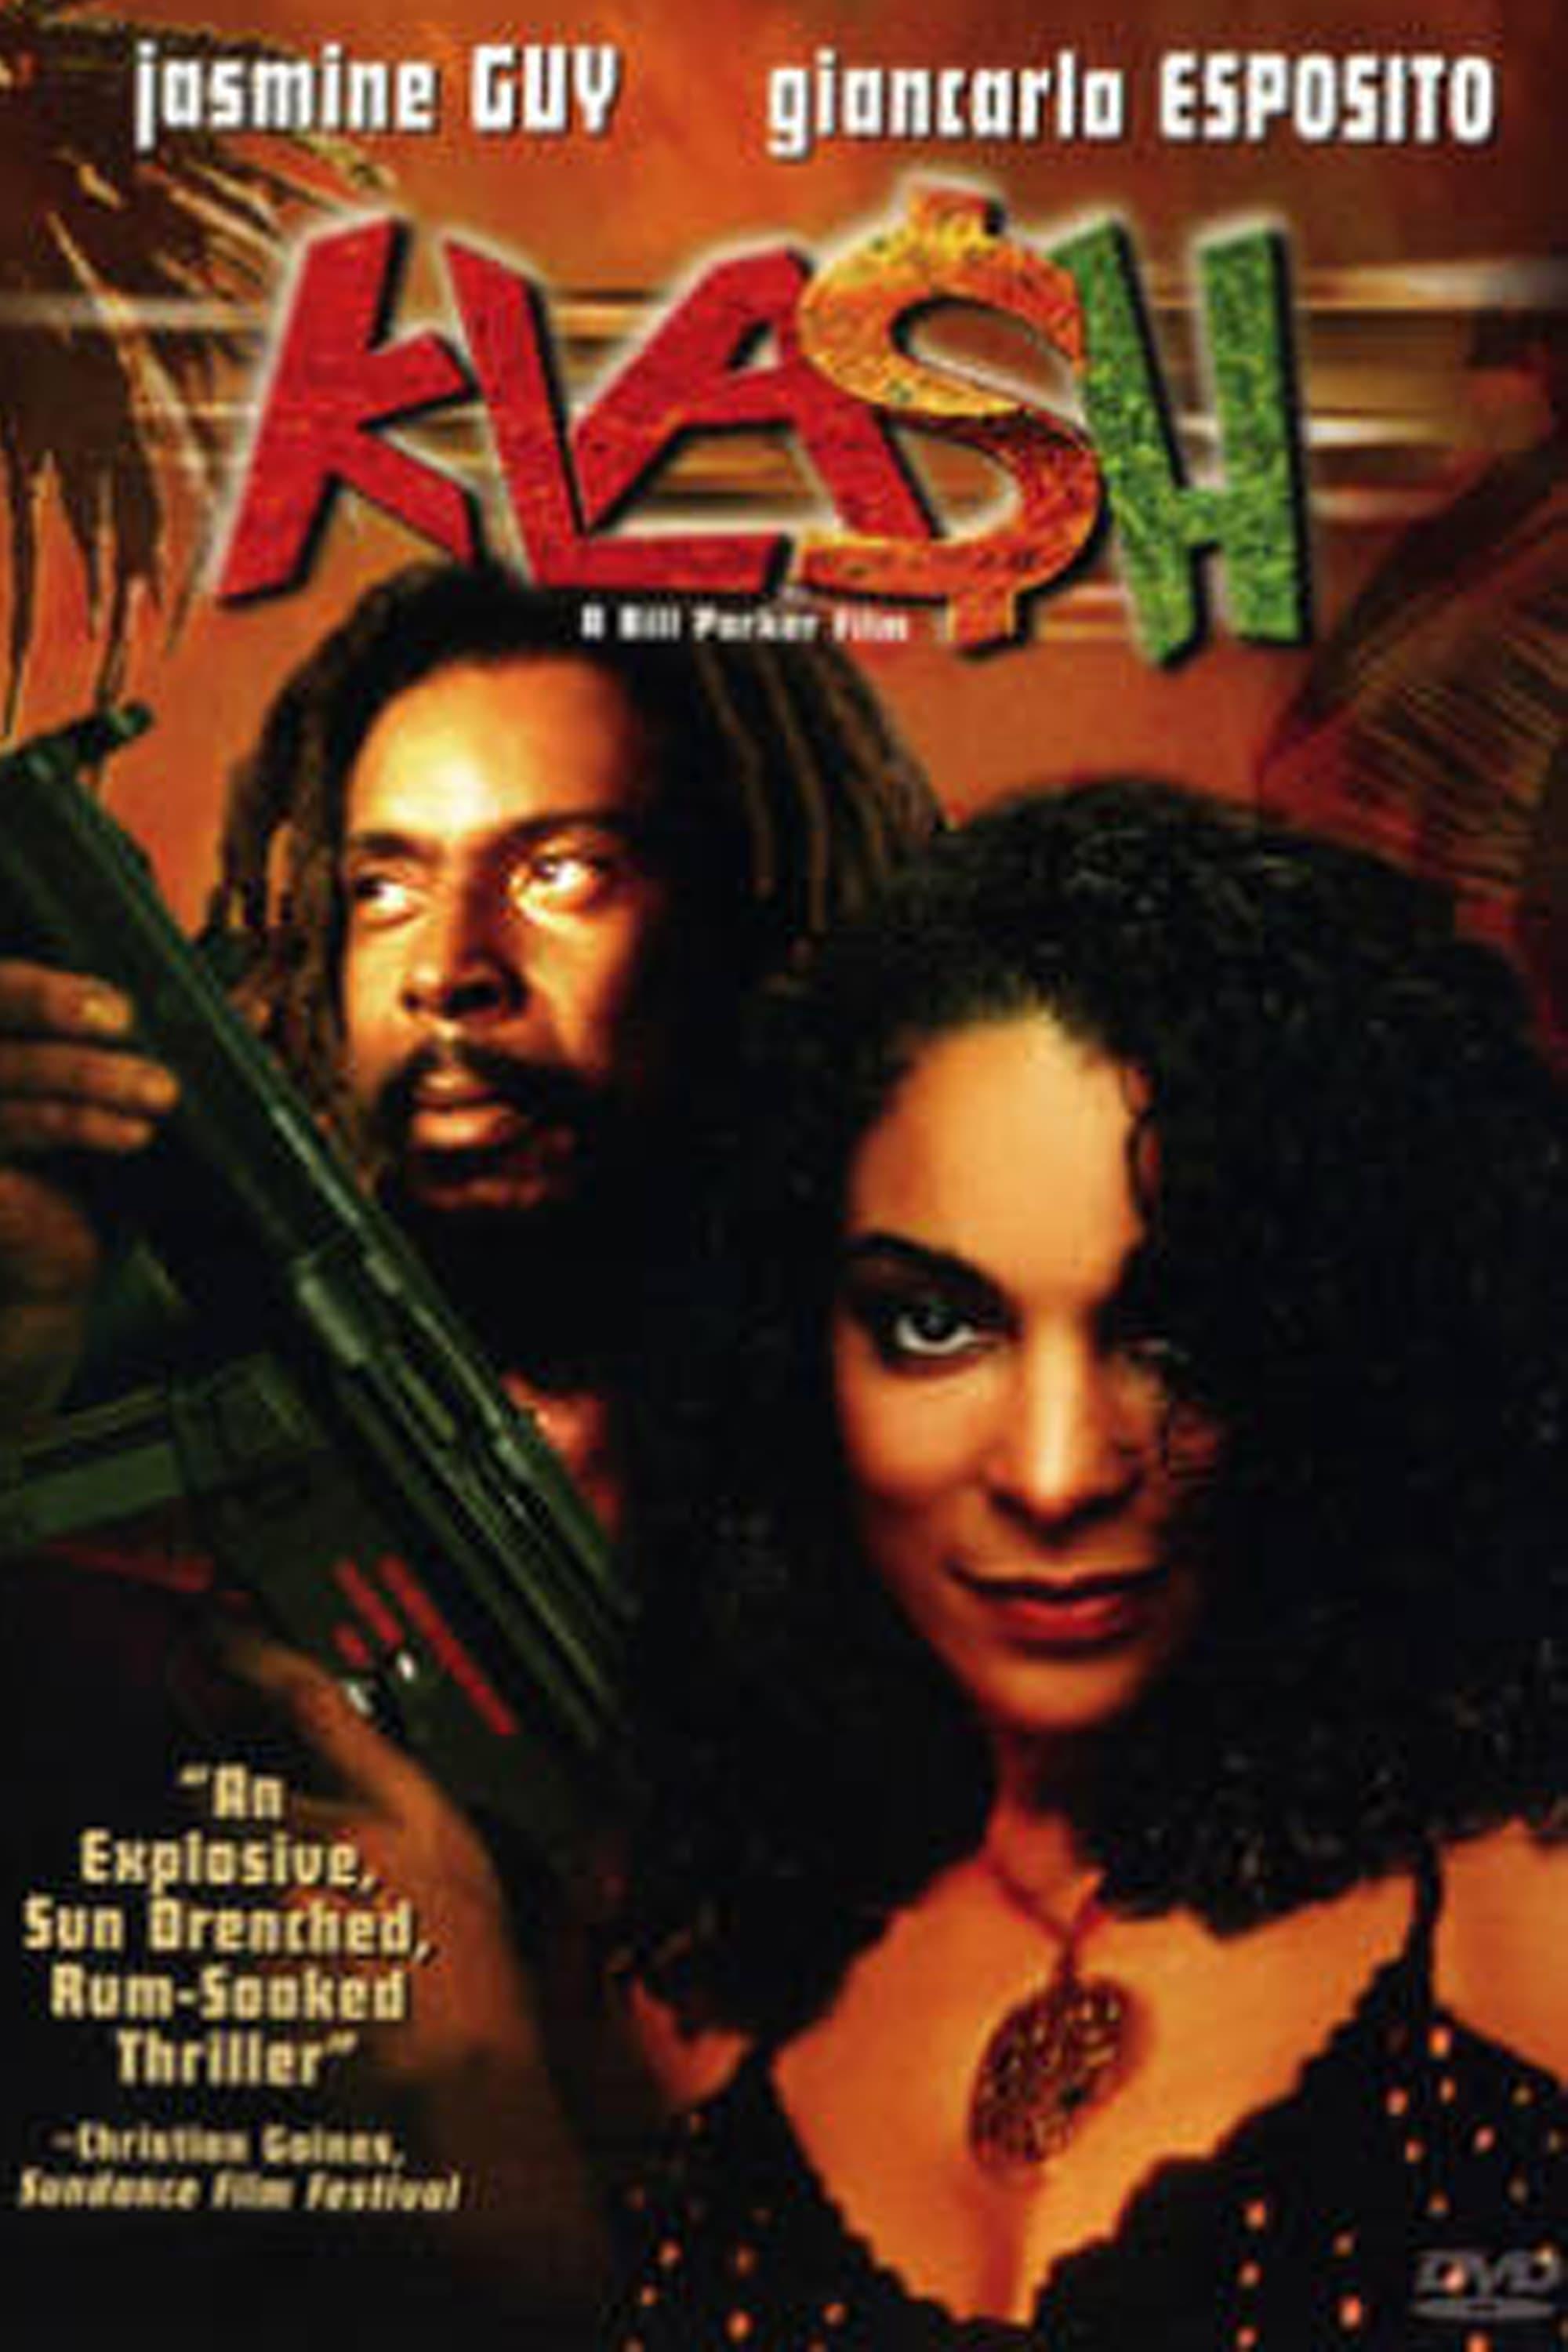 Klash poster